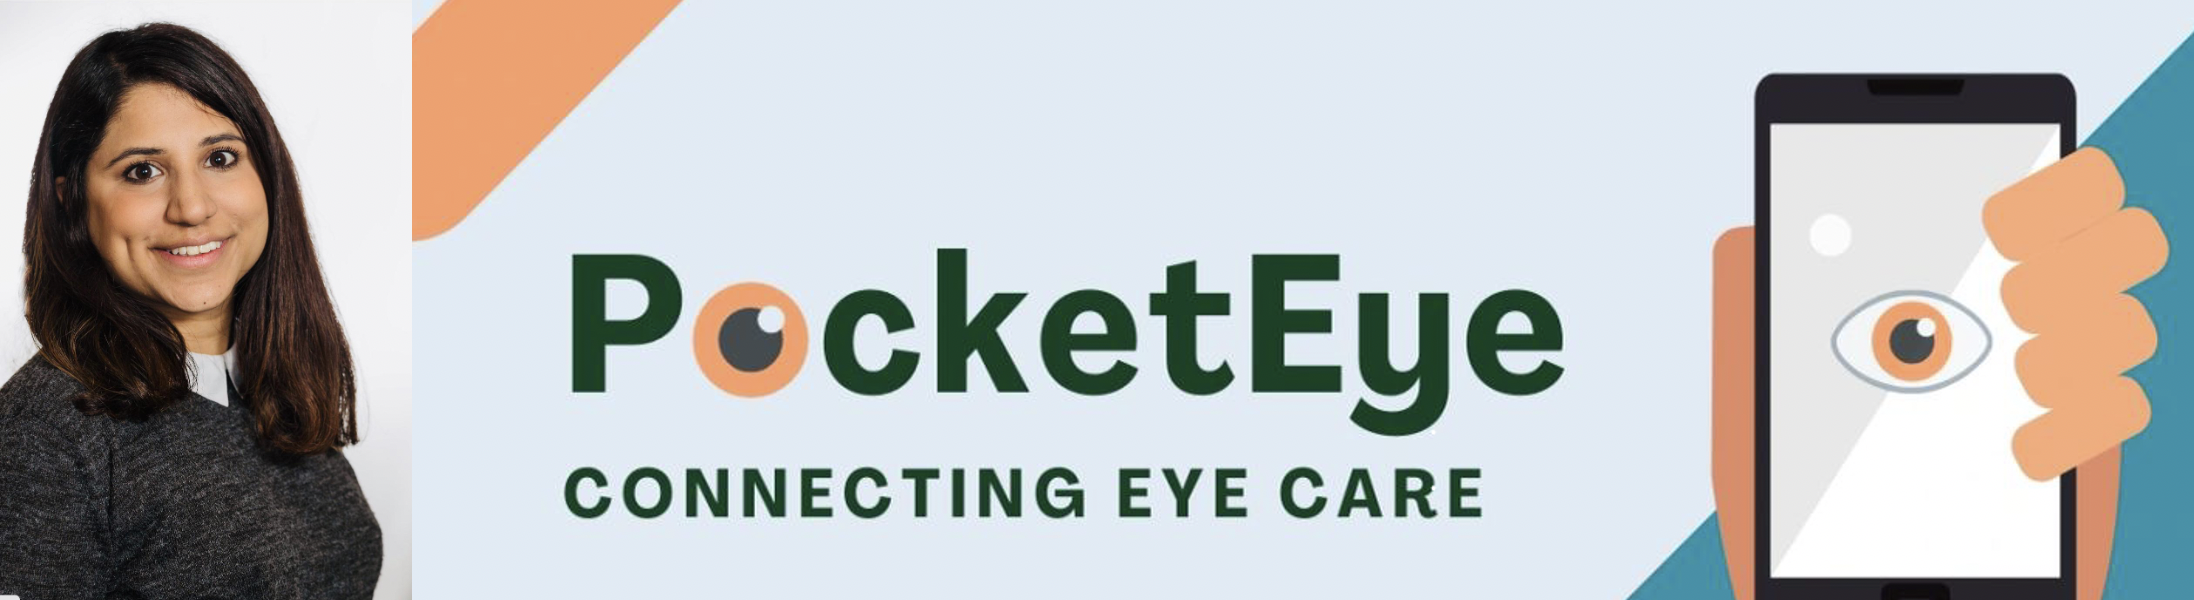 PocketEye: Connecting Eye Care